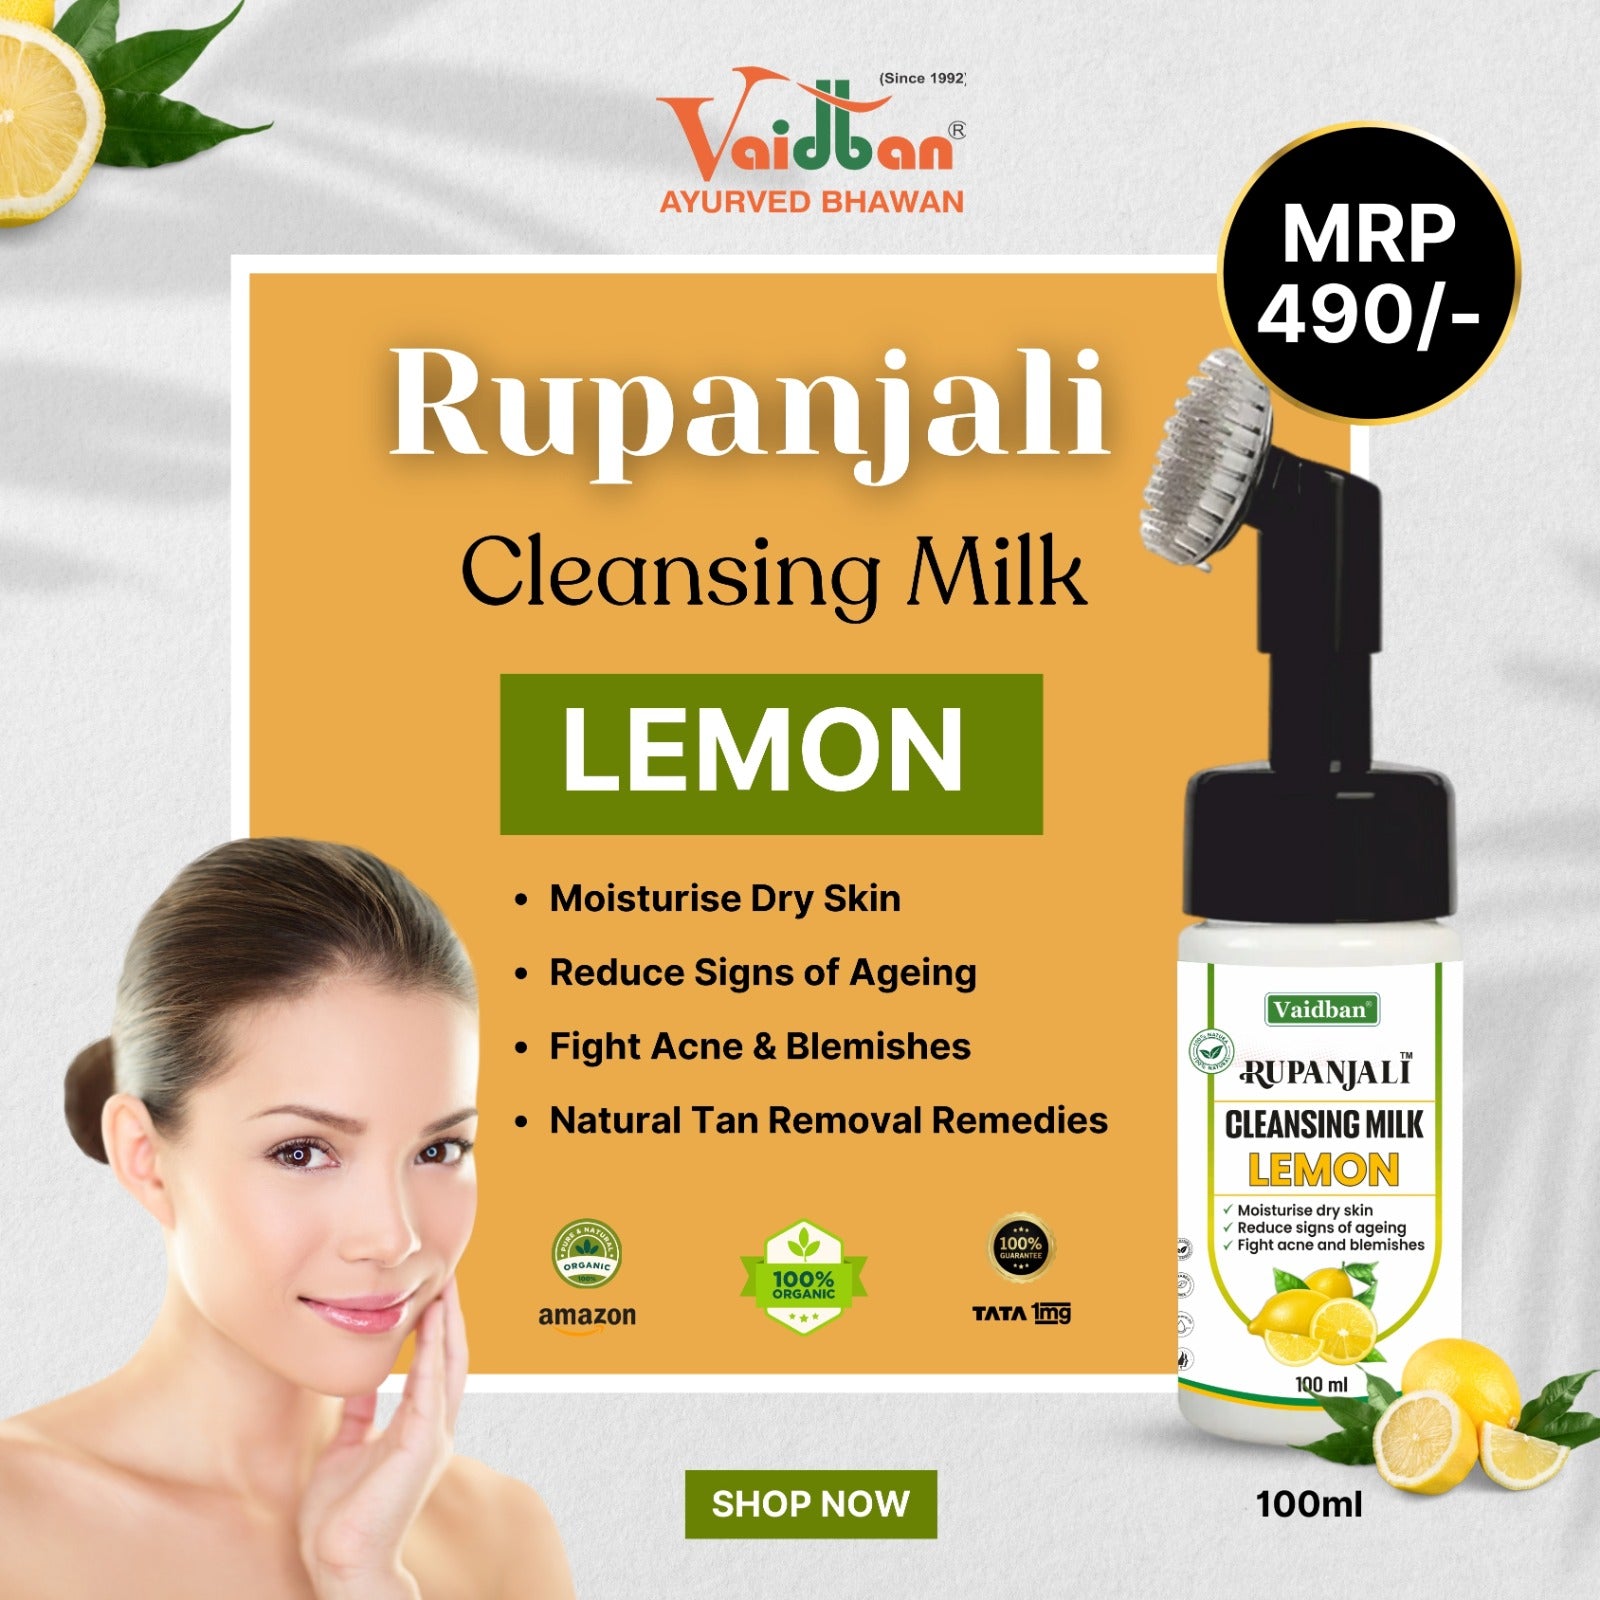 Vaidban Rupanjali Lemon Cleansing Milk - 100ml | Hydrating, Age-Defying, Acne-Battling, Natural Tan Removal